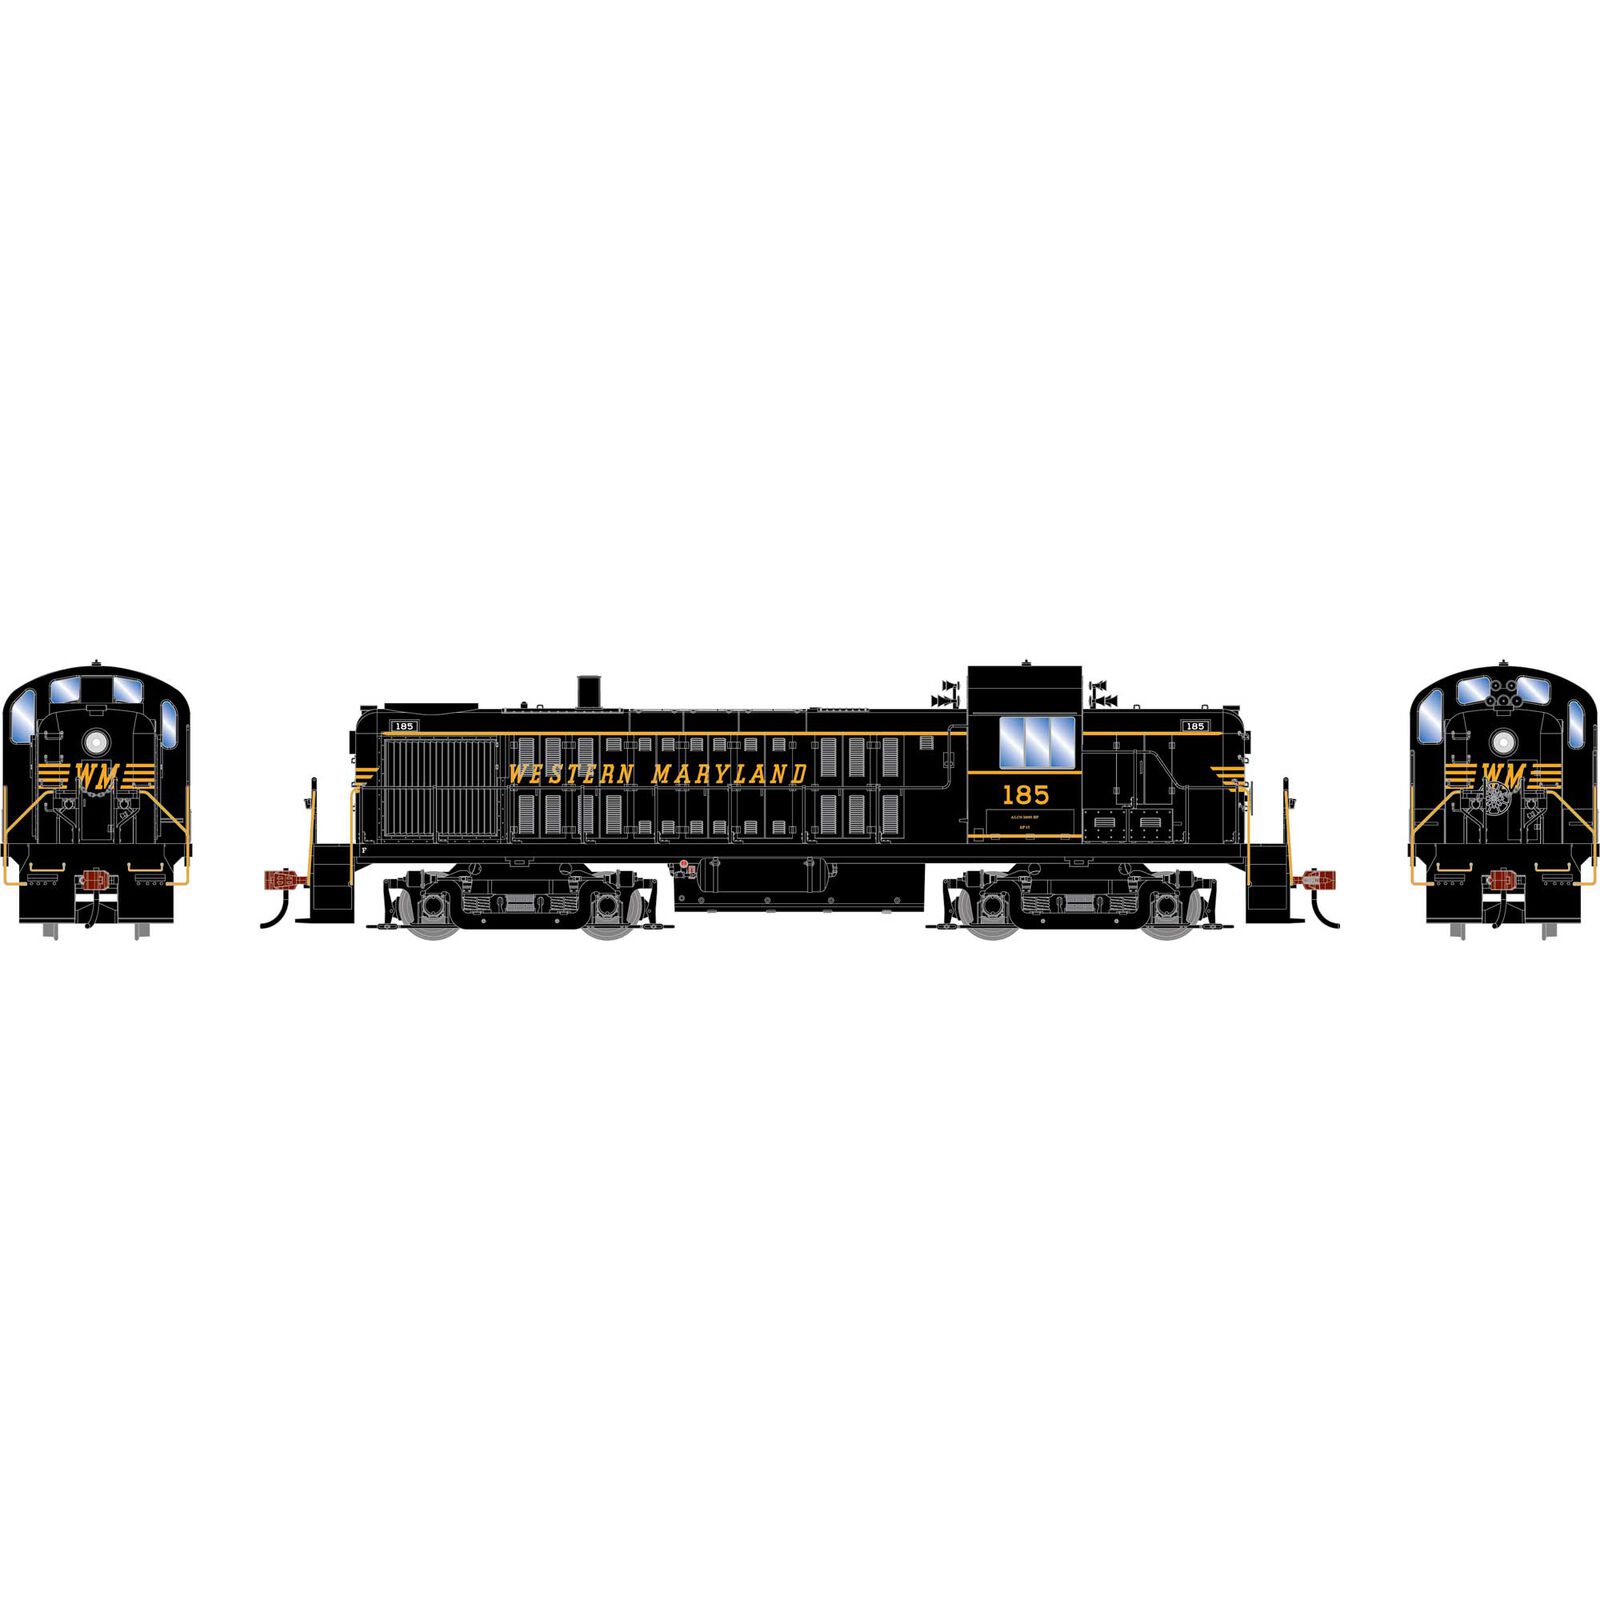 HO RS-3 Locomotive, WM #185